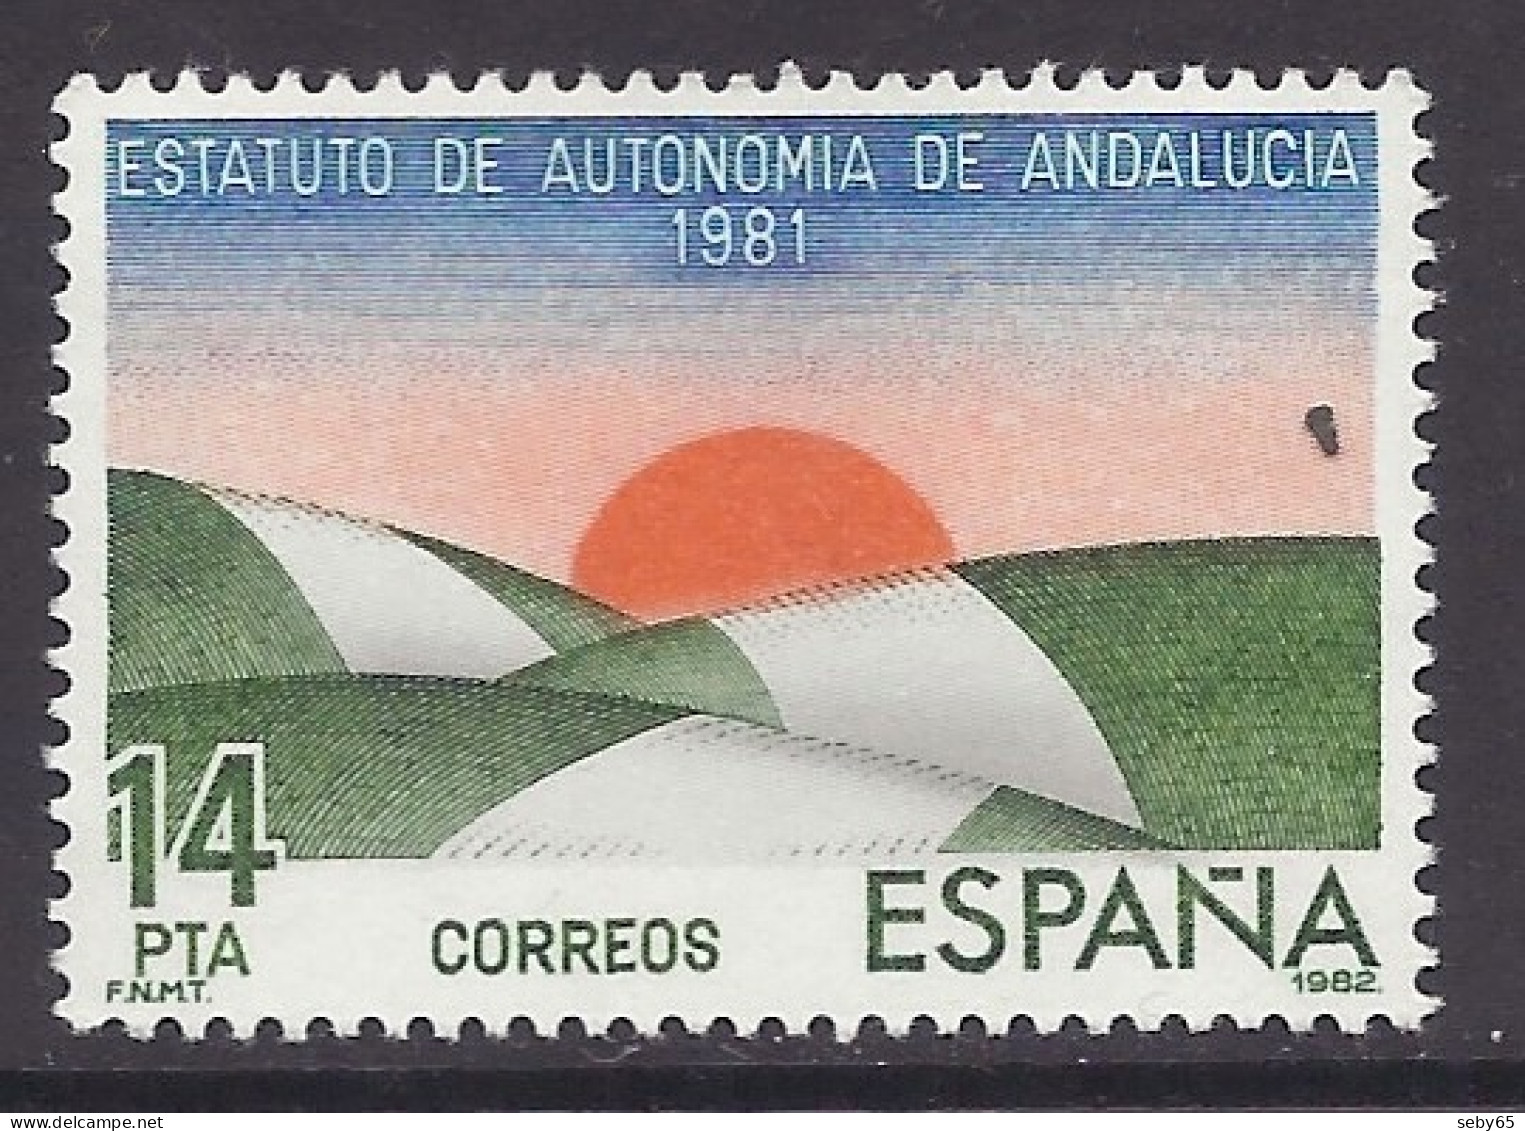 Spain 1983 - Estatutos De Autonomías, Region De Andalucia, Andalusia, Sun Sunrise, Emblem - MNH - Neufs